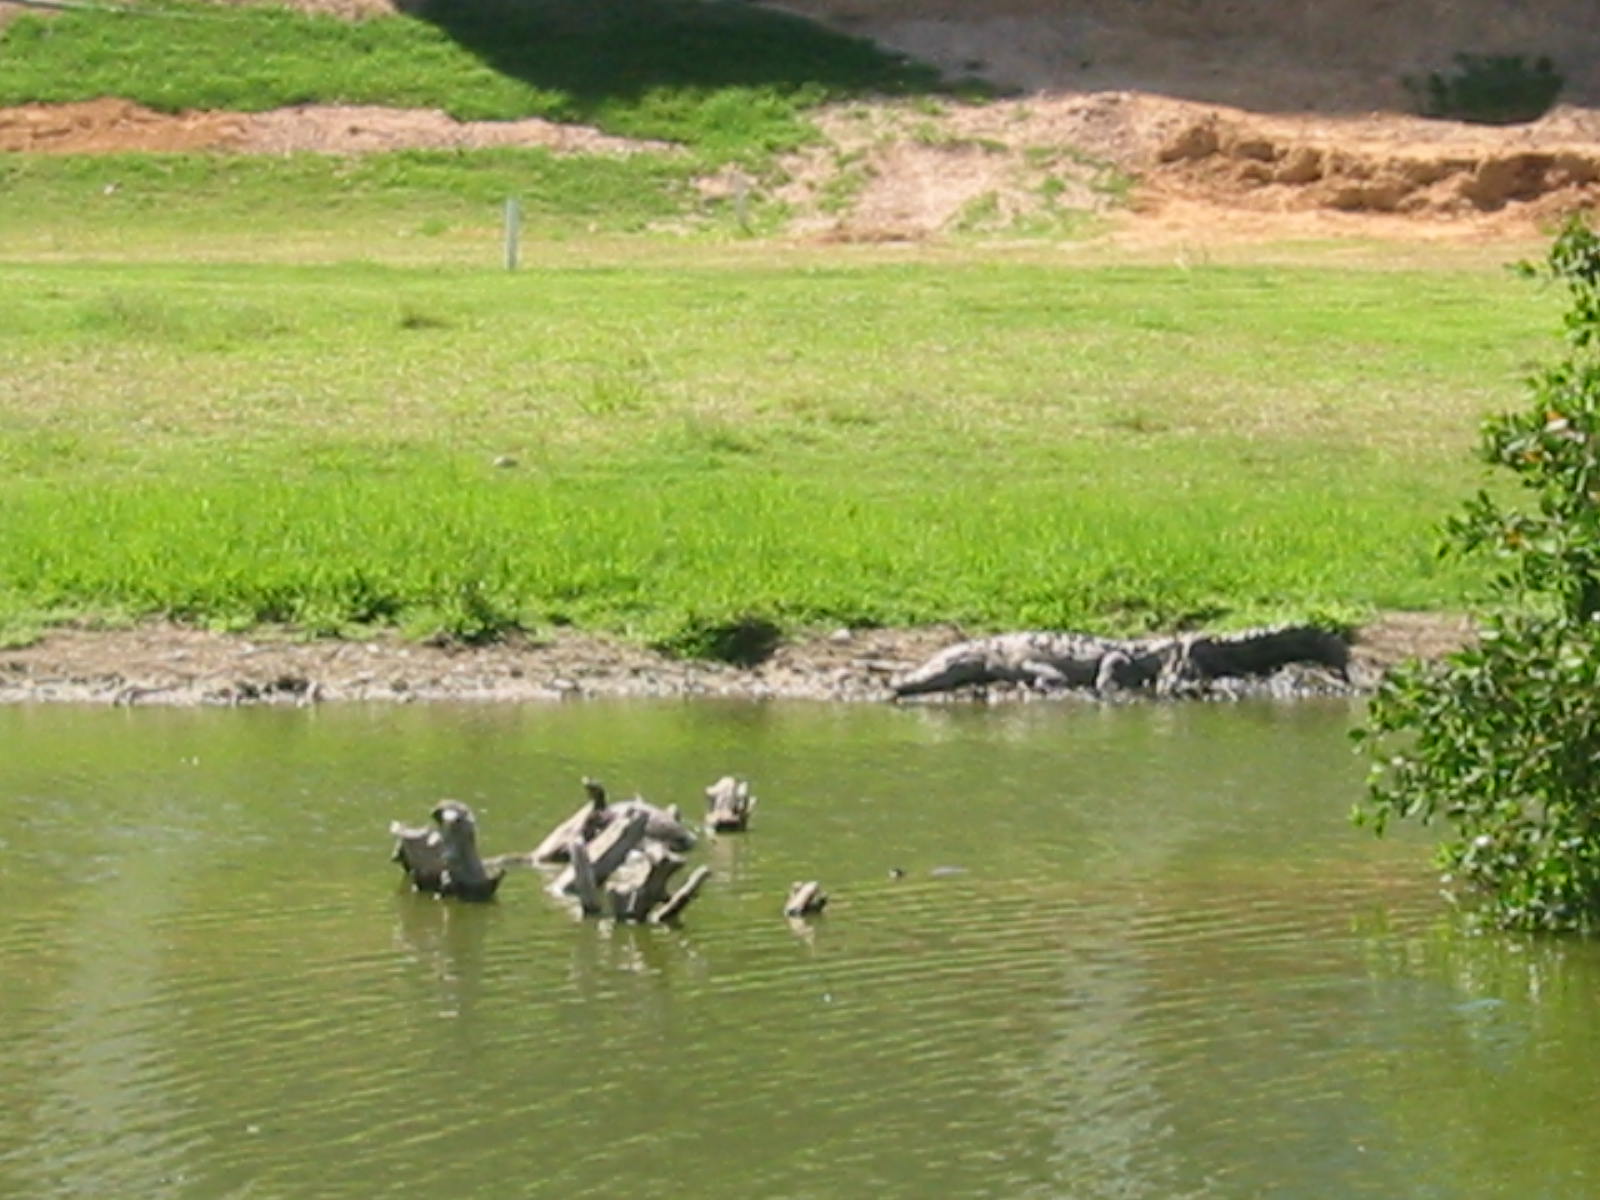 Puerto Vallarta - golf course pond - crocodile